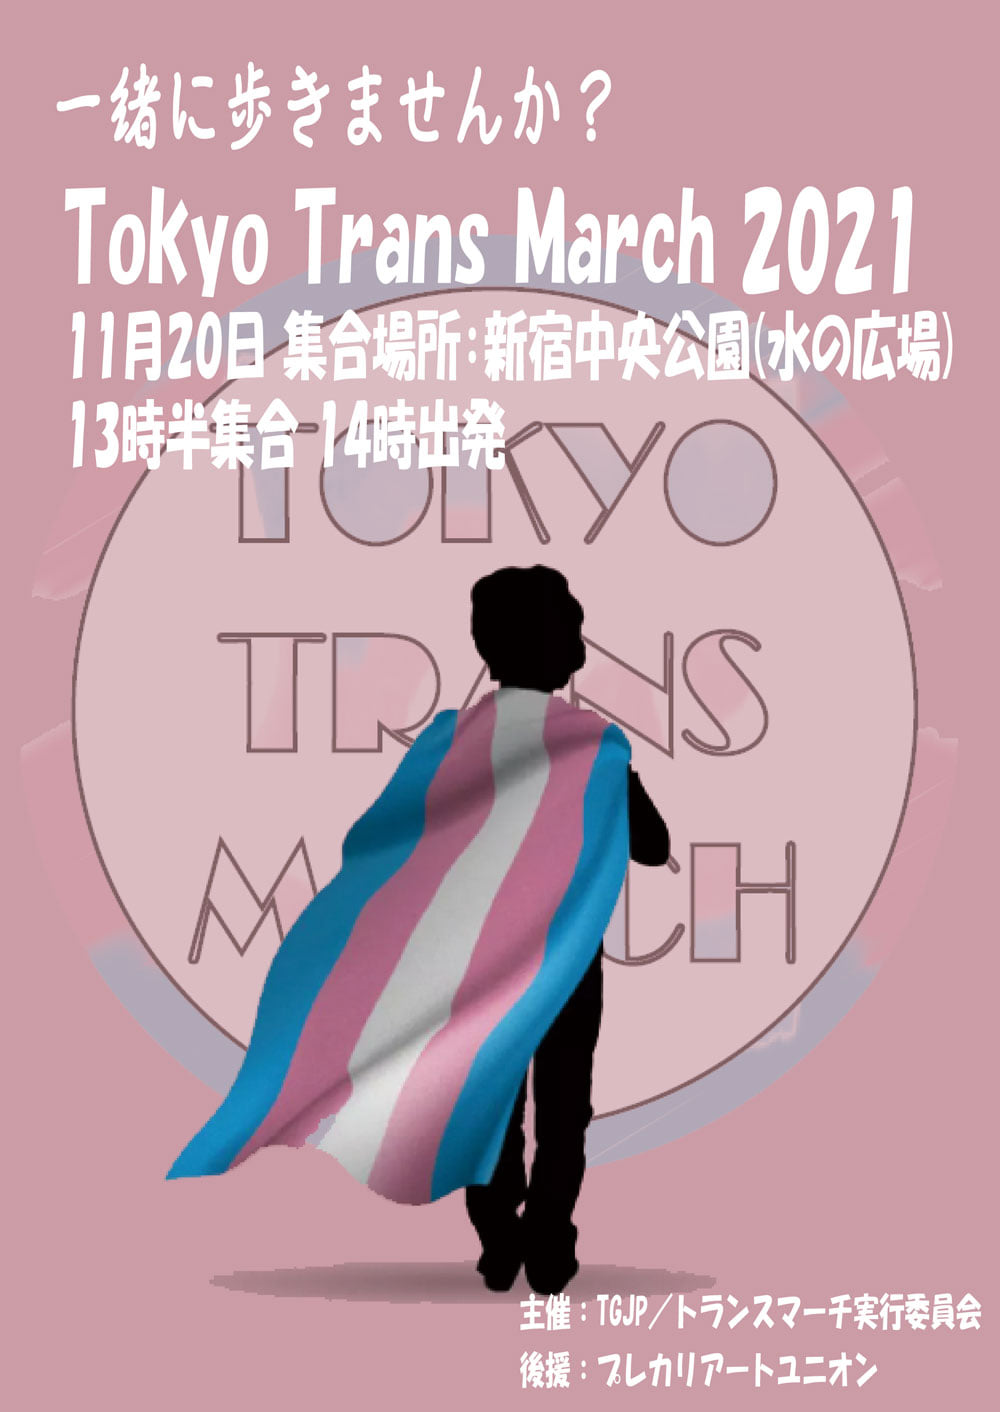 Tokyo Trans March November 20, 2021